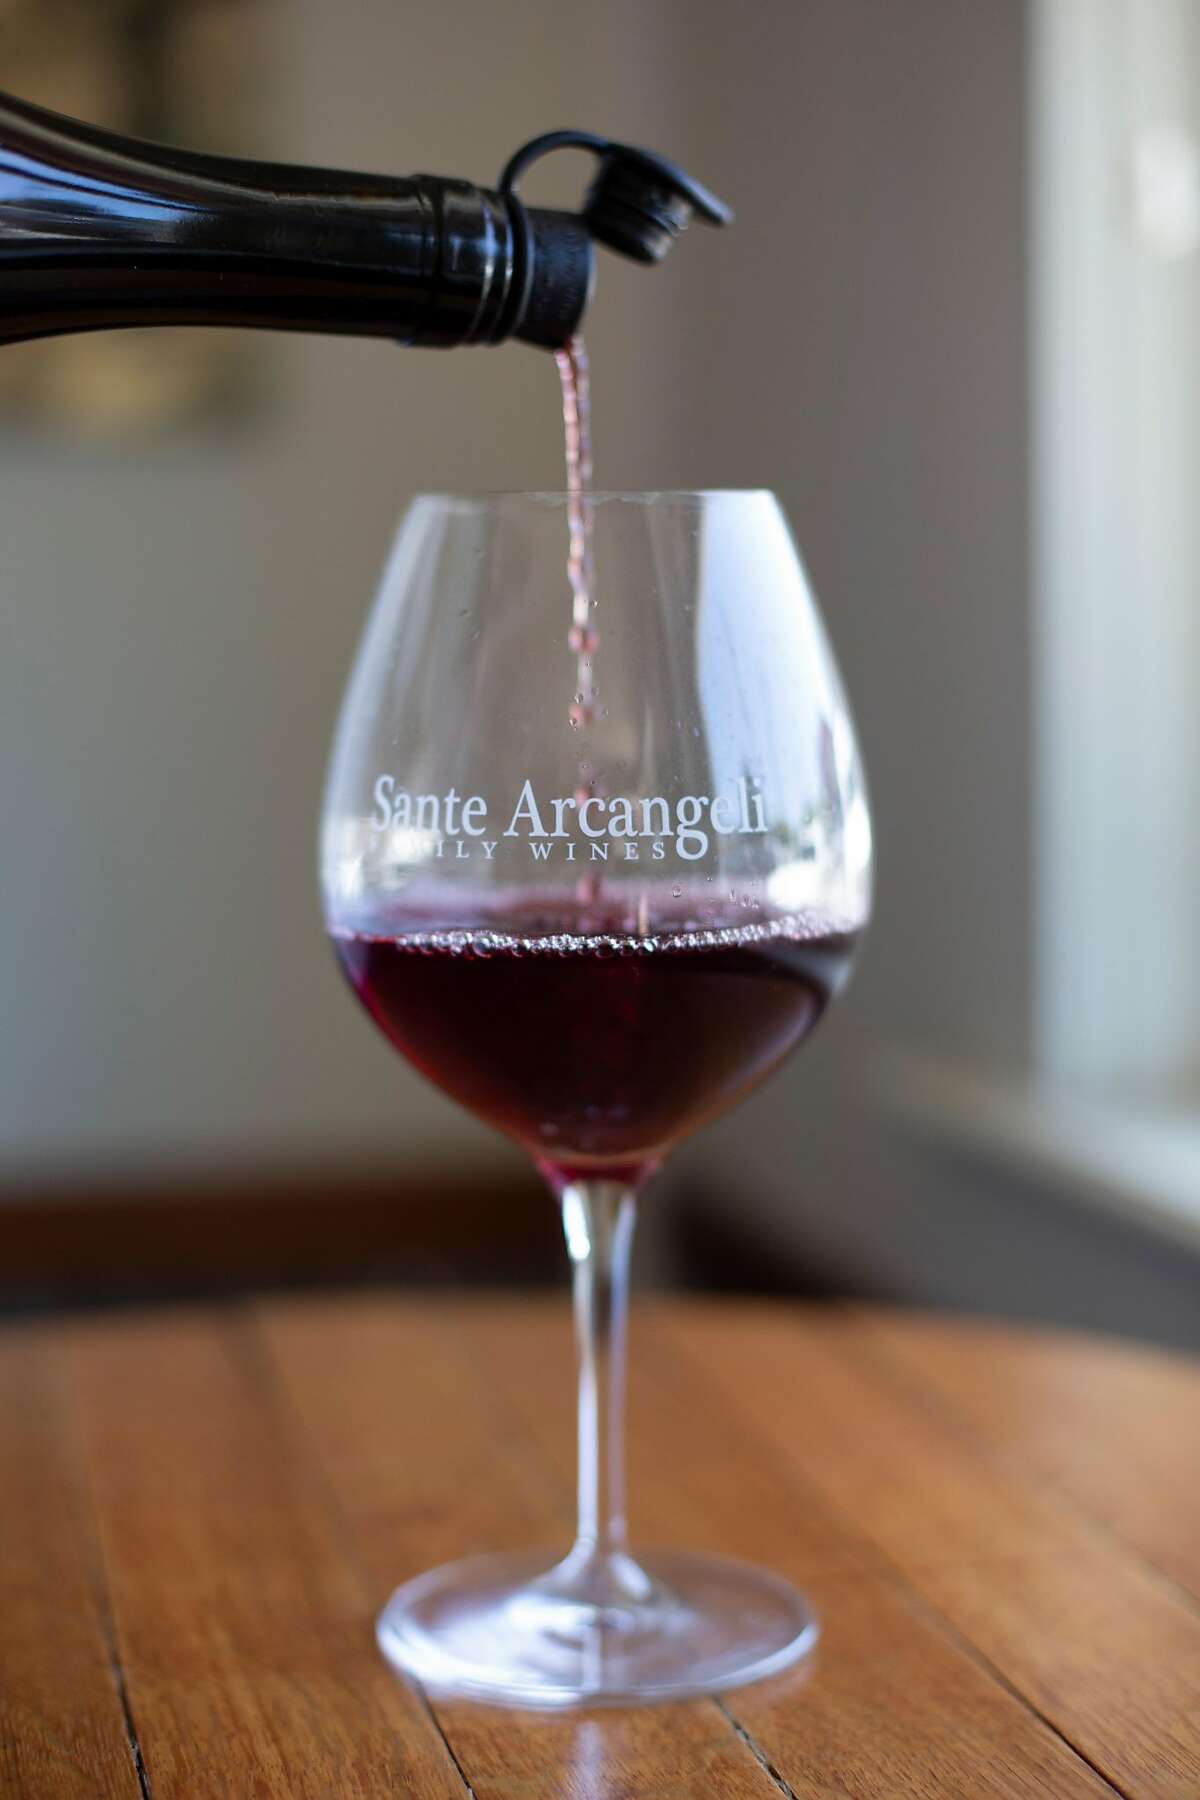 Employee John Marshall pours a glass of 2016 Pinot Noir, Split Rail Vineyard, at Sante Arcangeli Family Wines' tasting room in Pescadero, Calif. on Saturday, June 23, 2018.